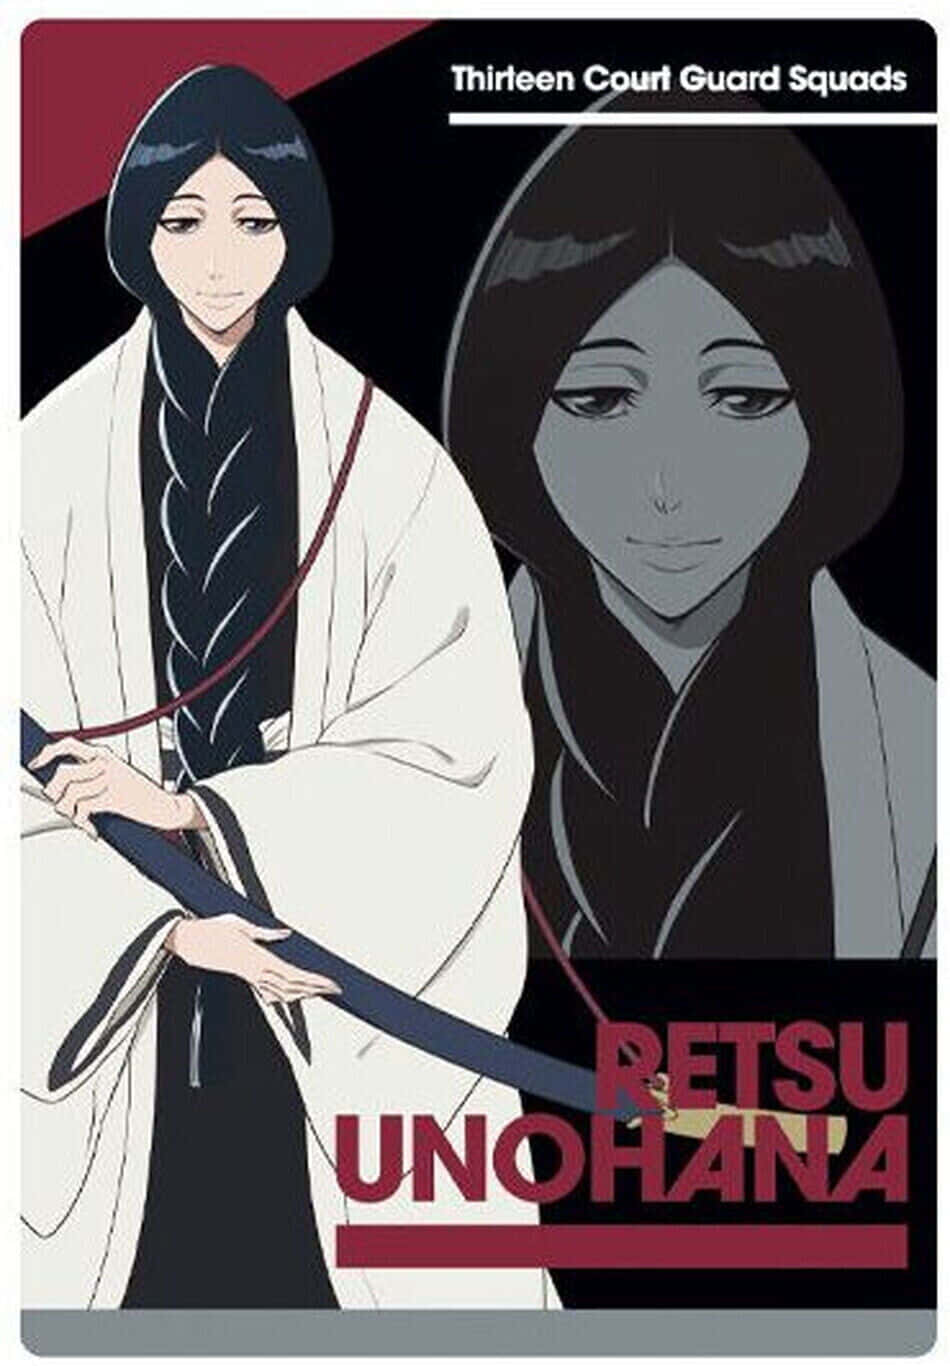 Retsu Unohana from the anime series "Bleach" Wallpaper